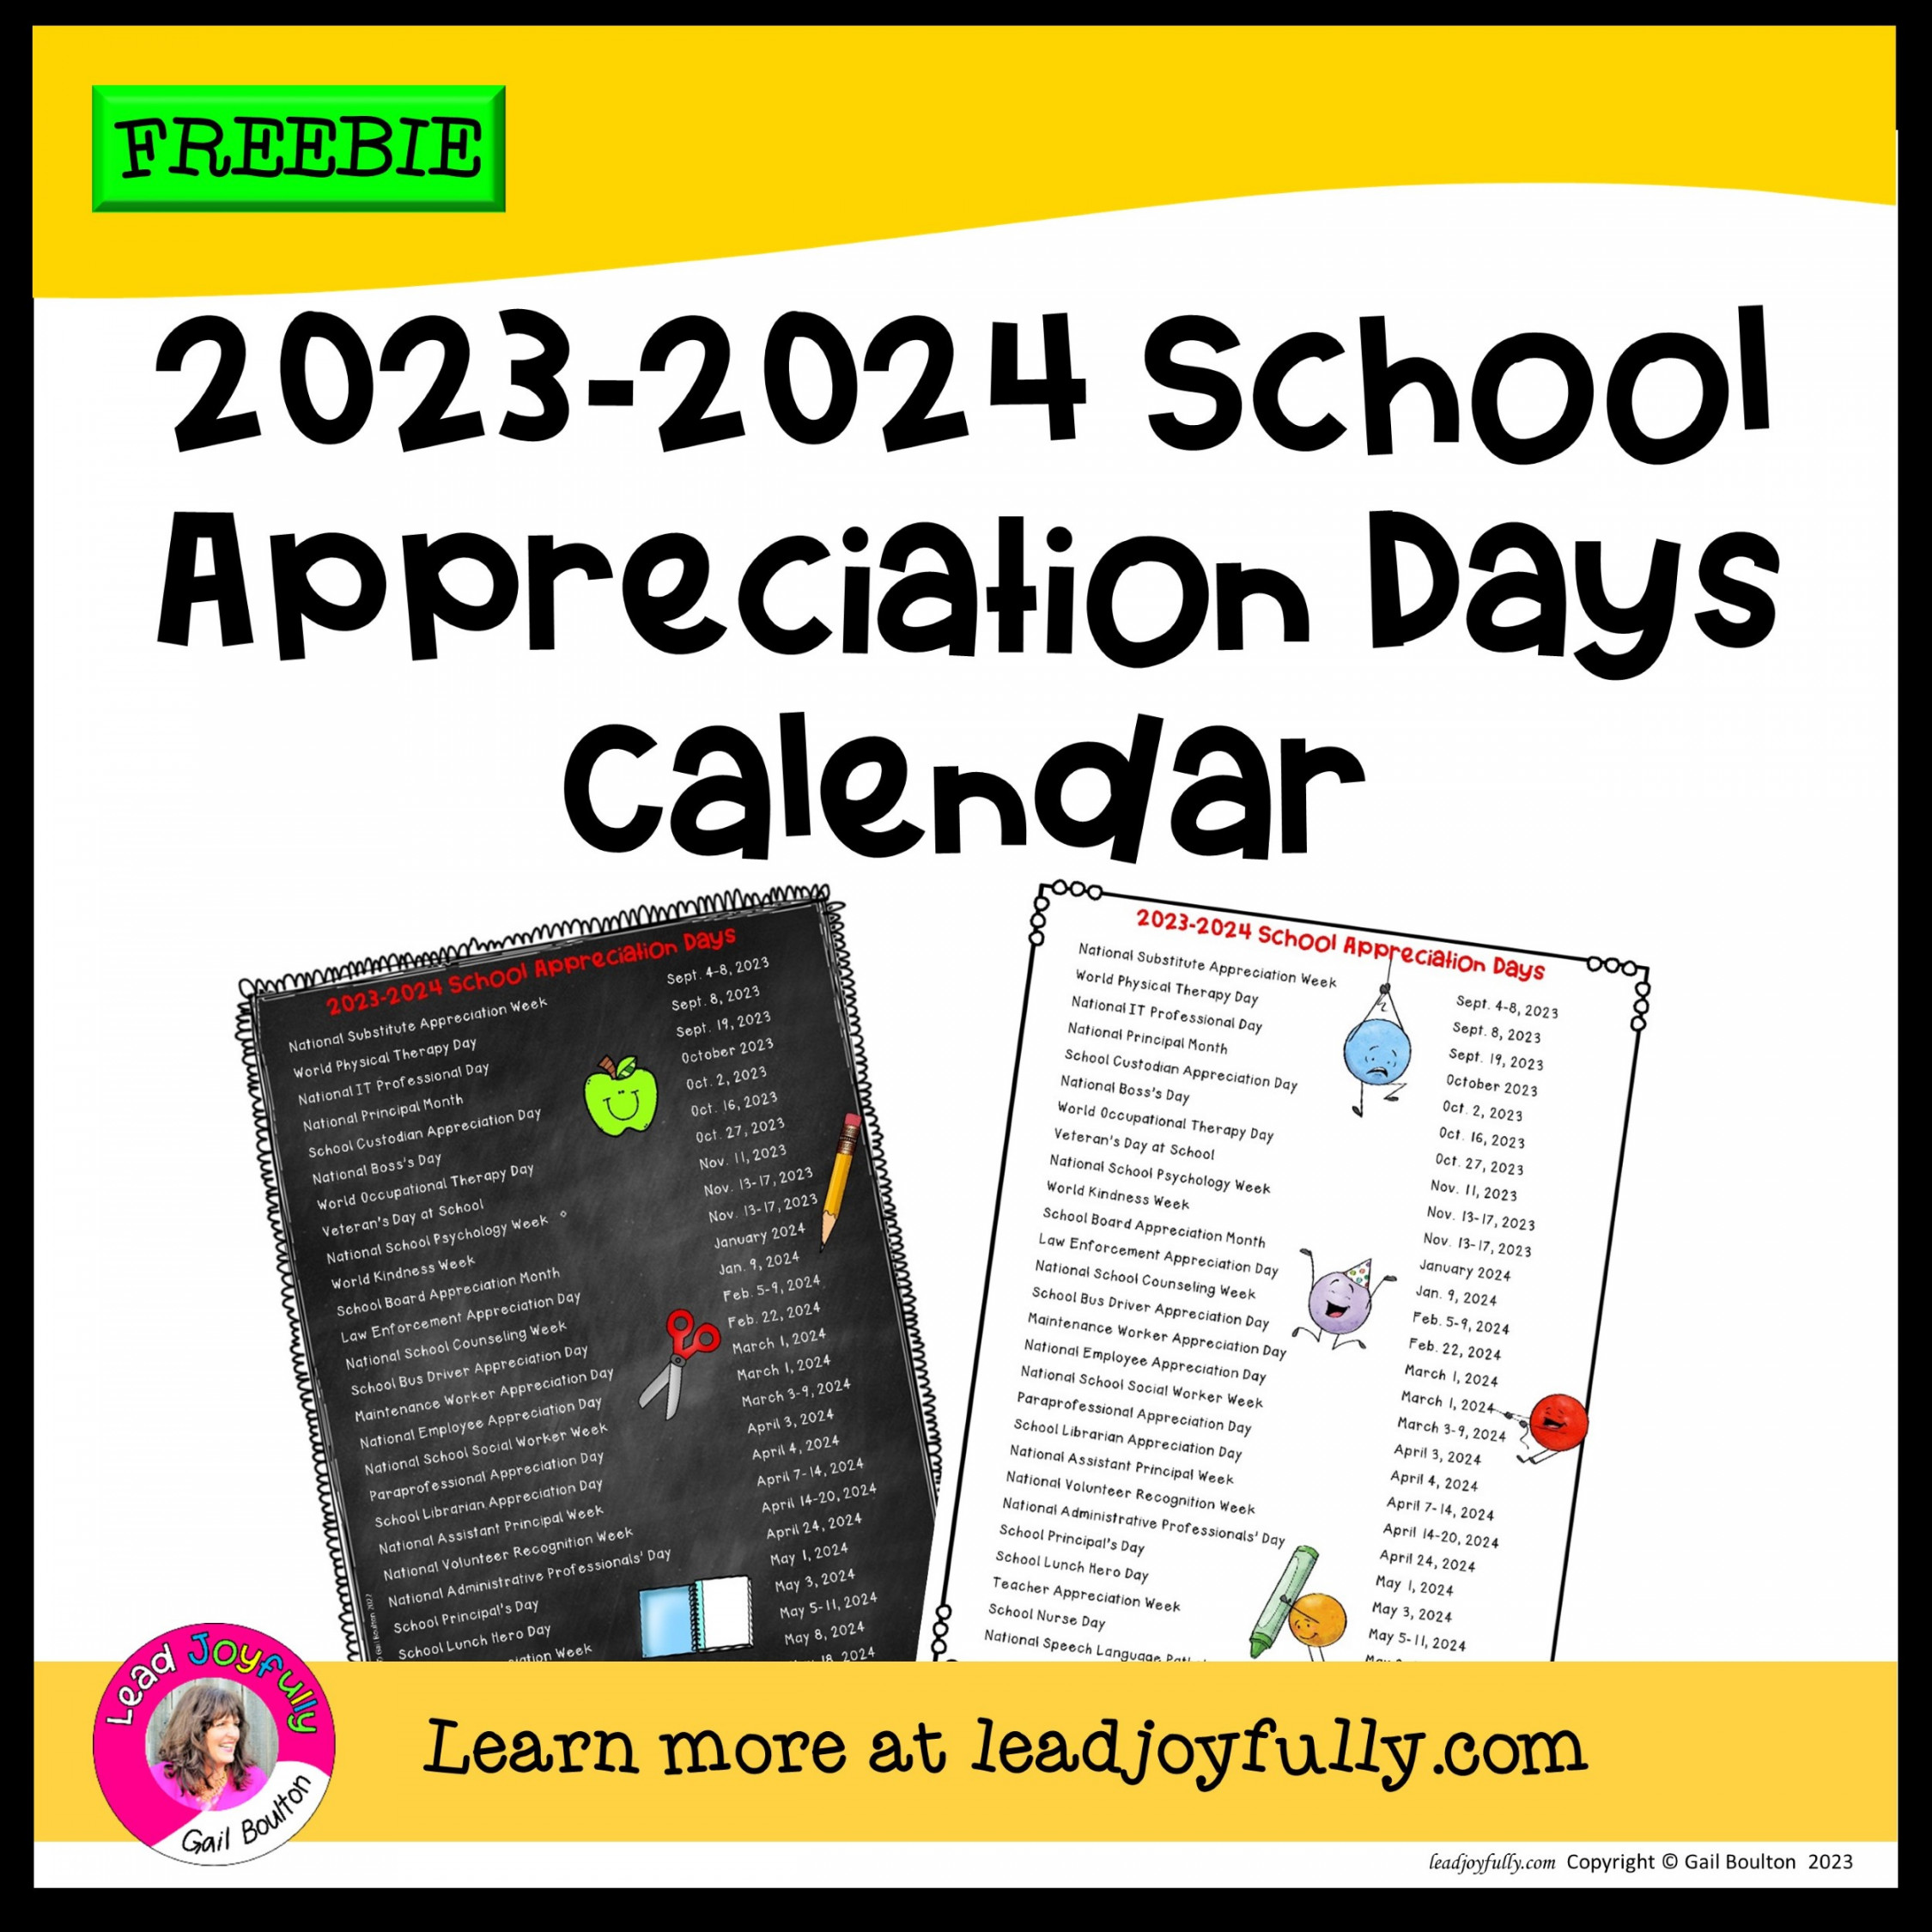 FREE download! - School Appreciation Calendar  Lead Joyfully